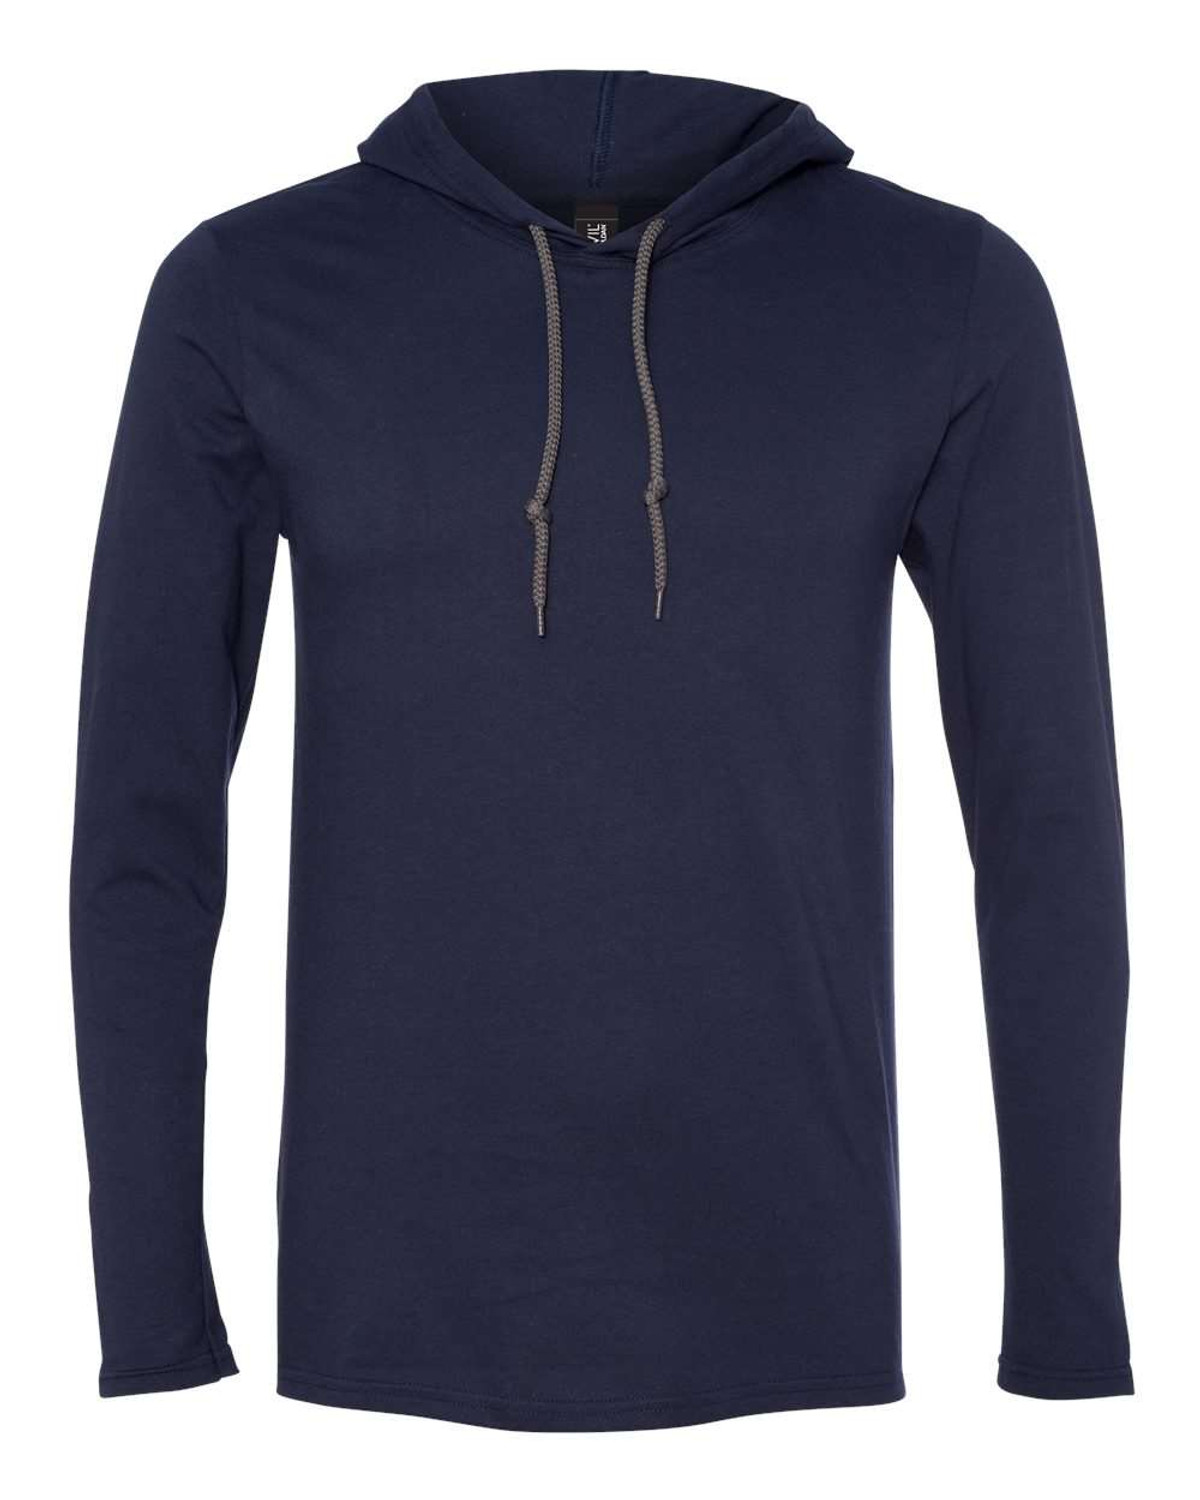 Gildan Unisex Assorted Colors Fleece Sweat Shirts Size xl - at